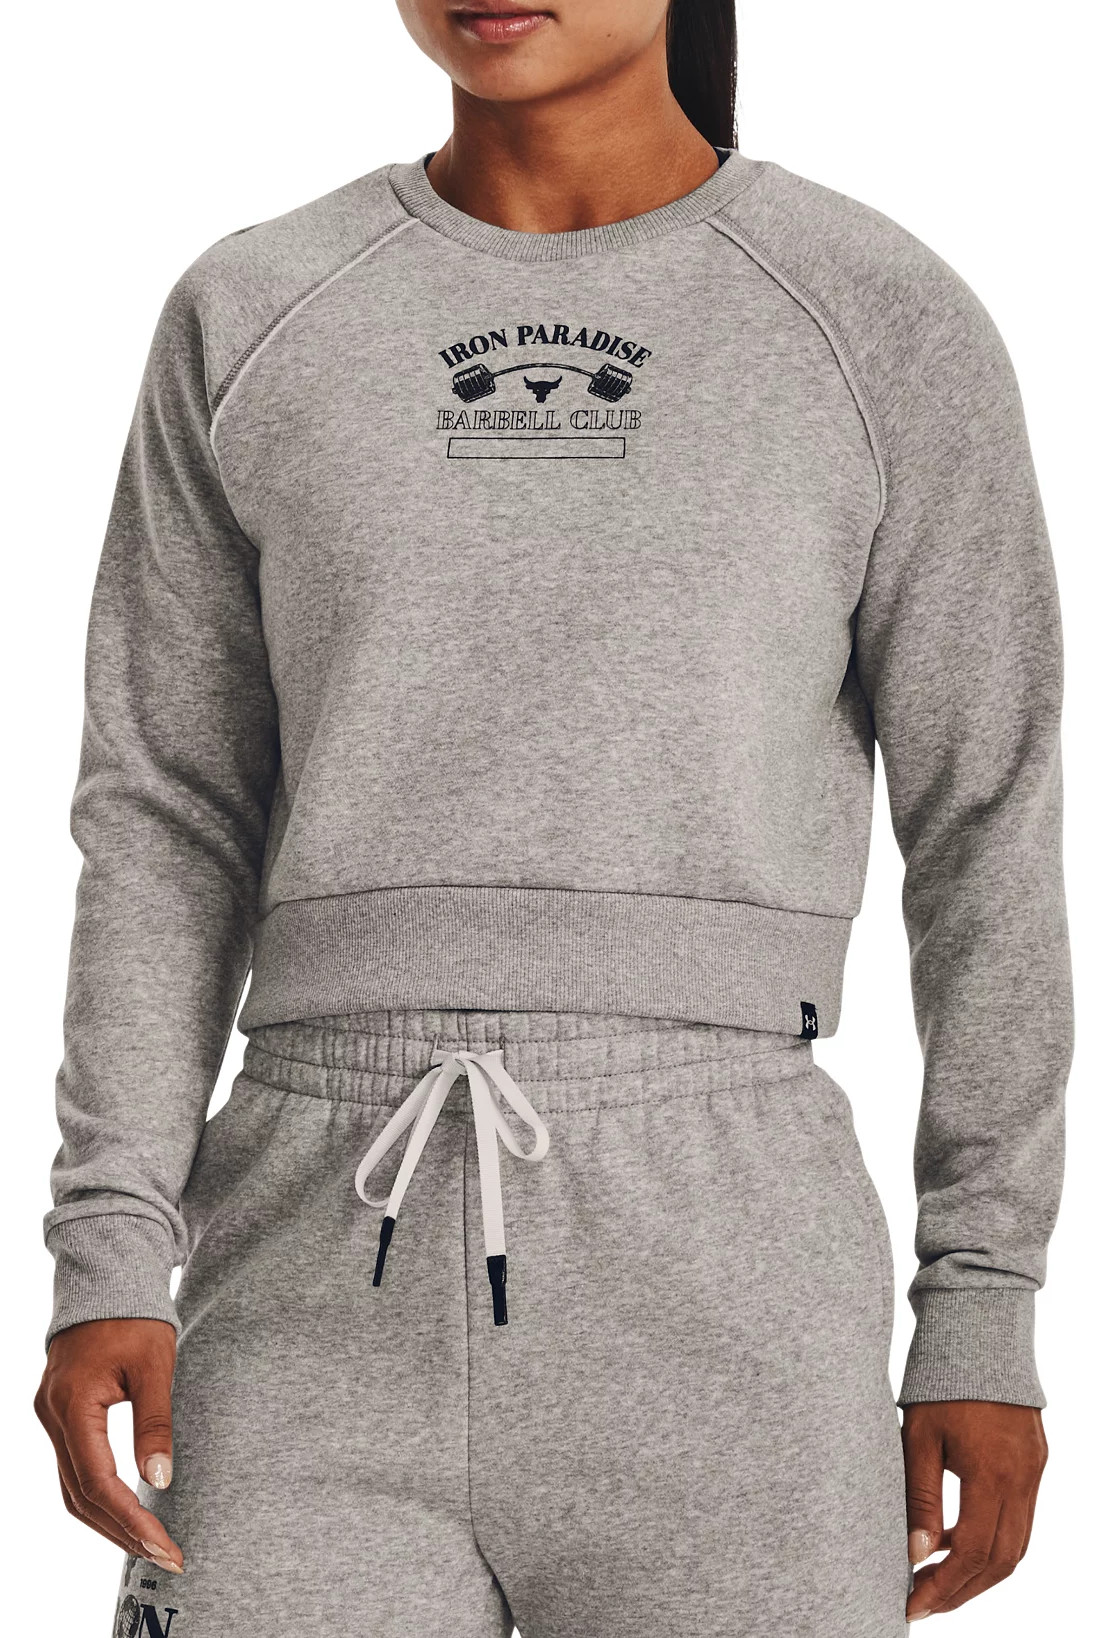 Sweatshirt Under Armour UA Pjt Rck Hm Gym Flc Crw-GRY